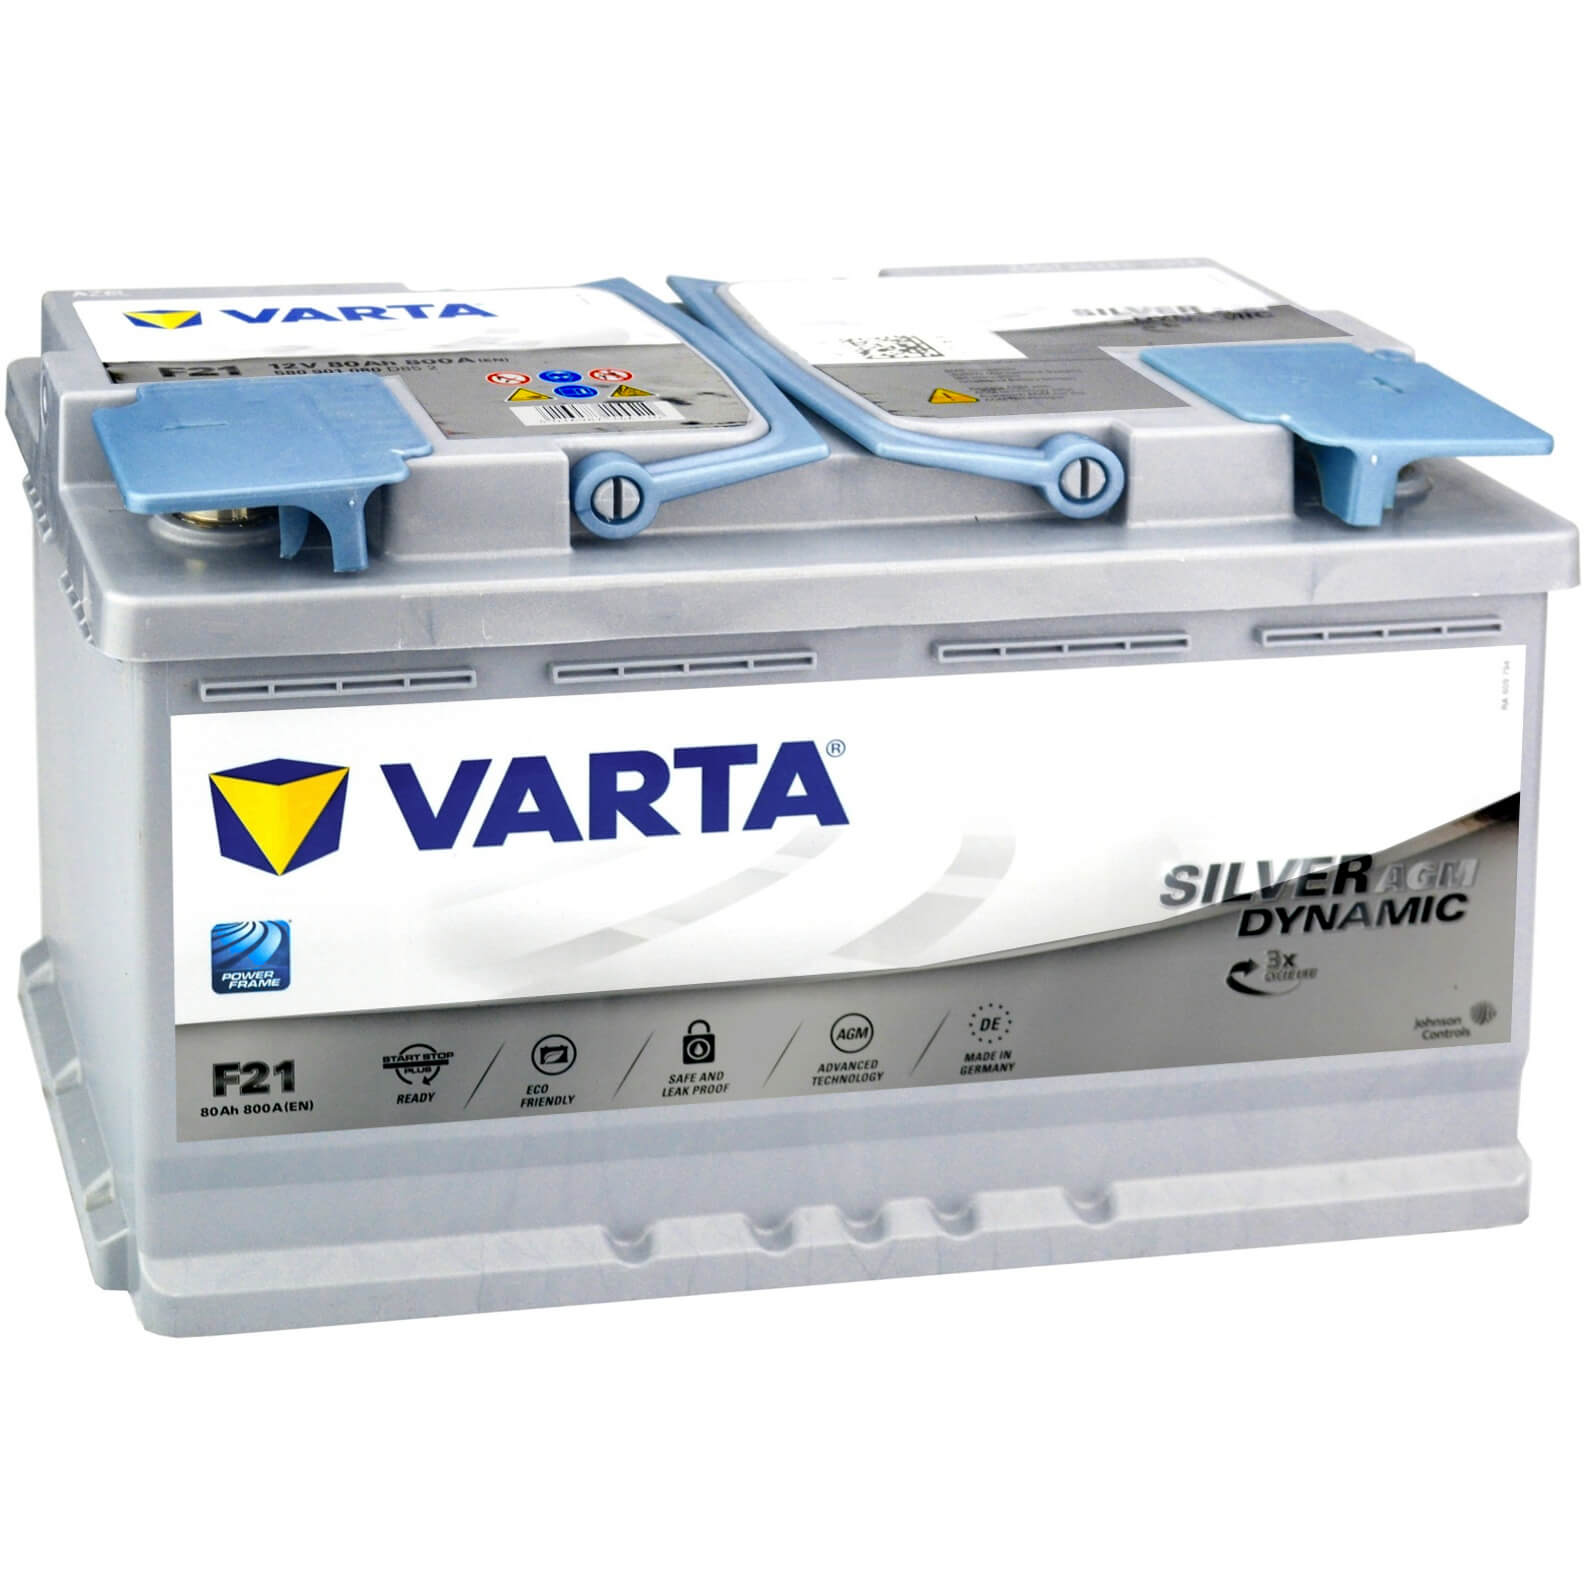 Varta LA80 Professional DP AGM battery 12V 80Ah 800A 840080080, Starter  batteries, Boots & Marine, Batteries by application